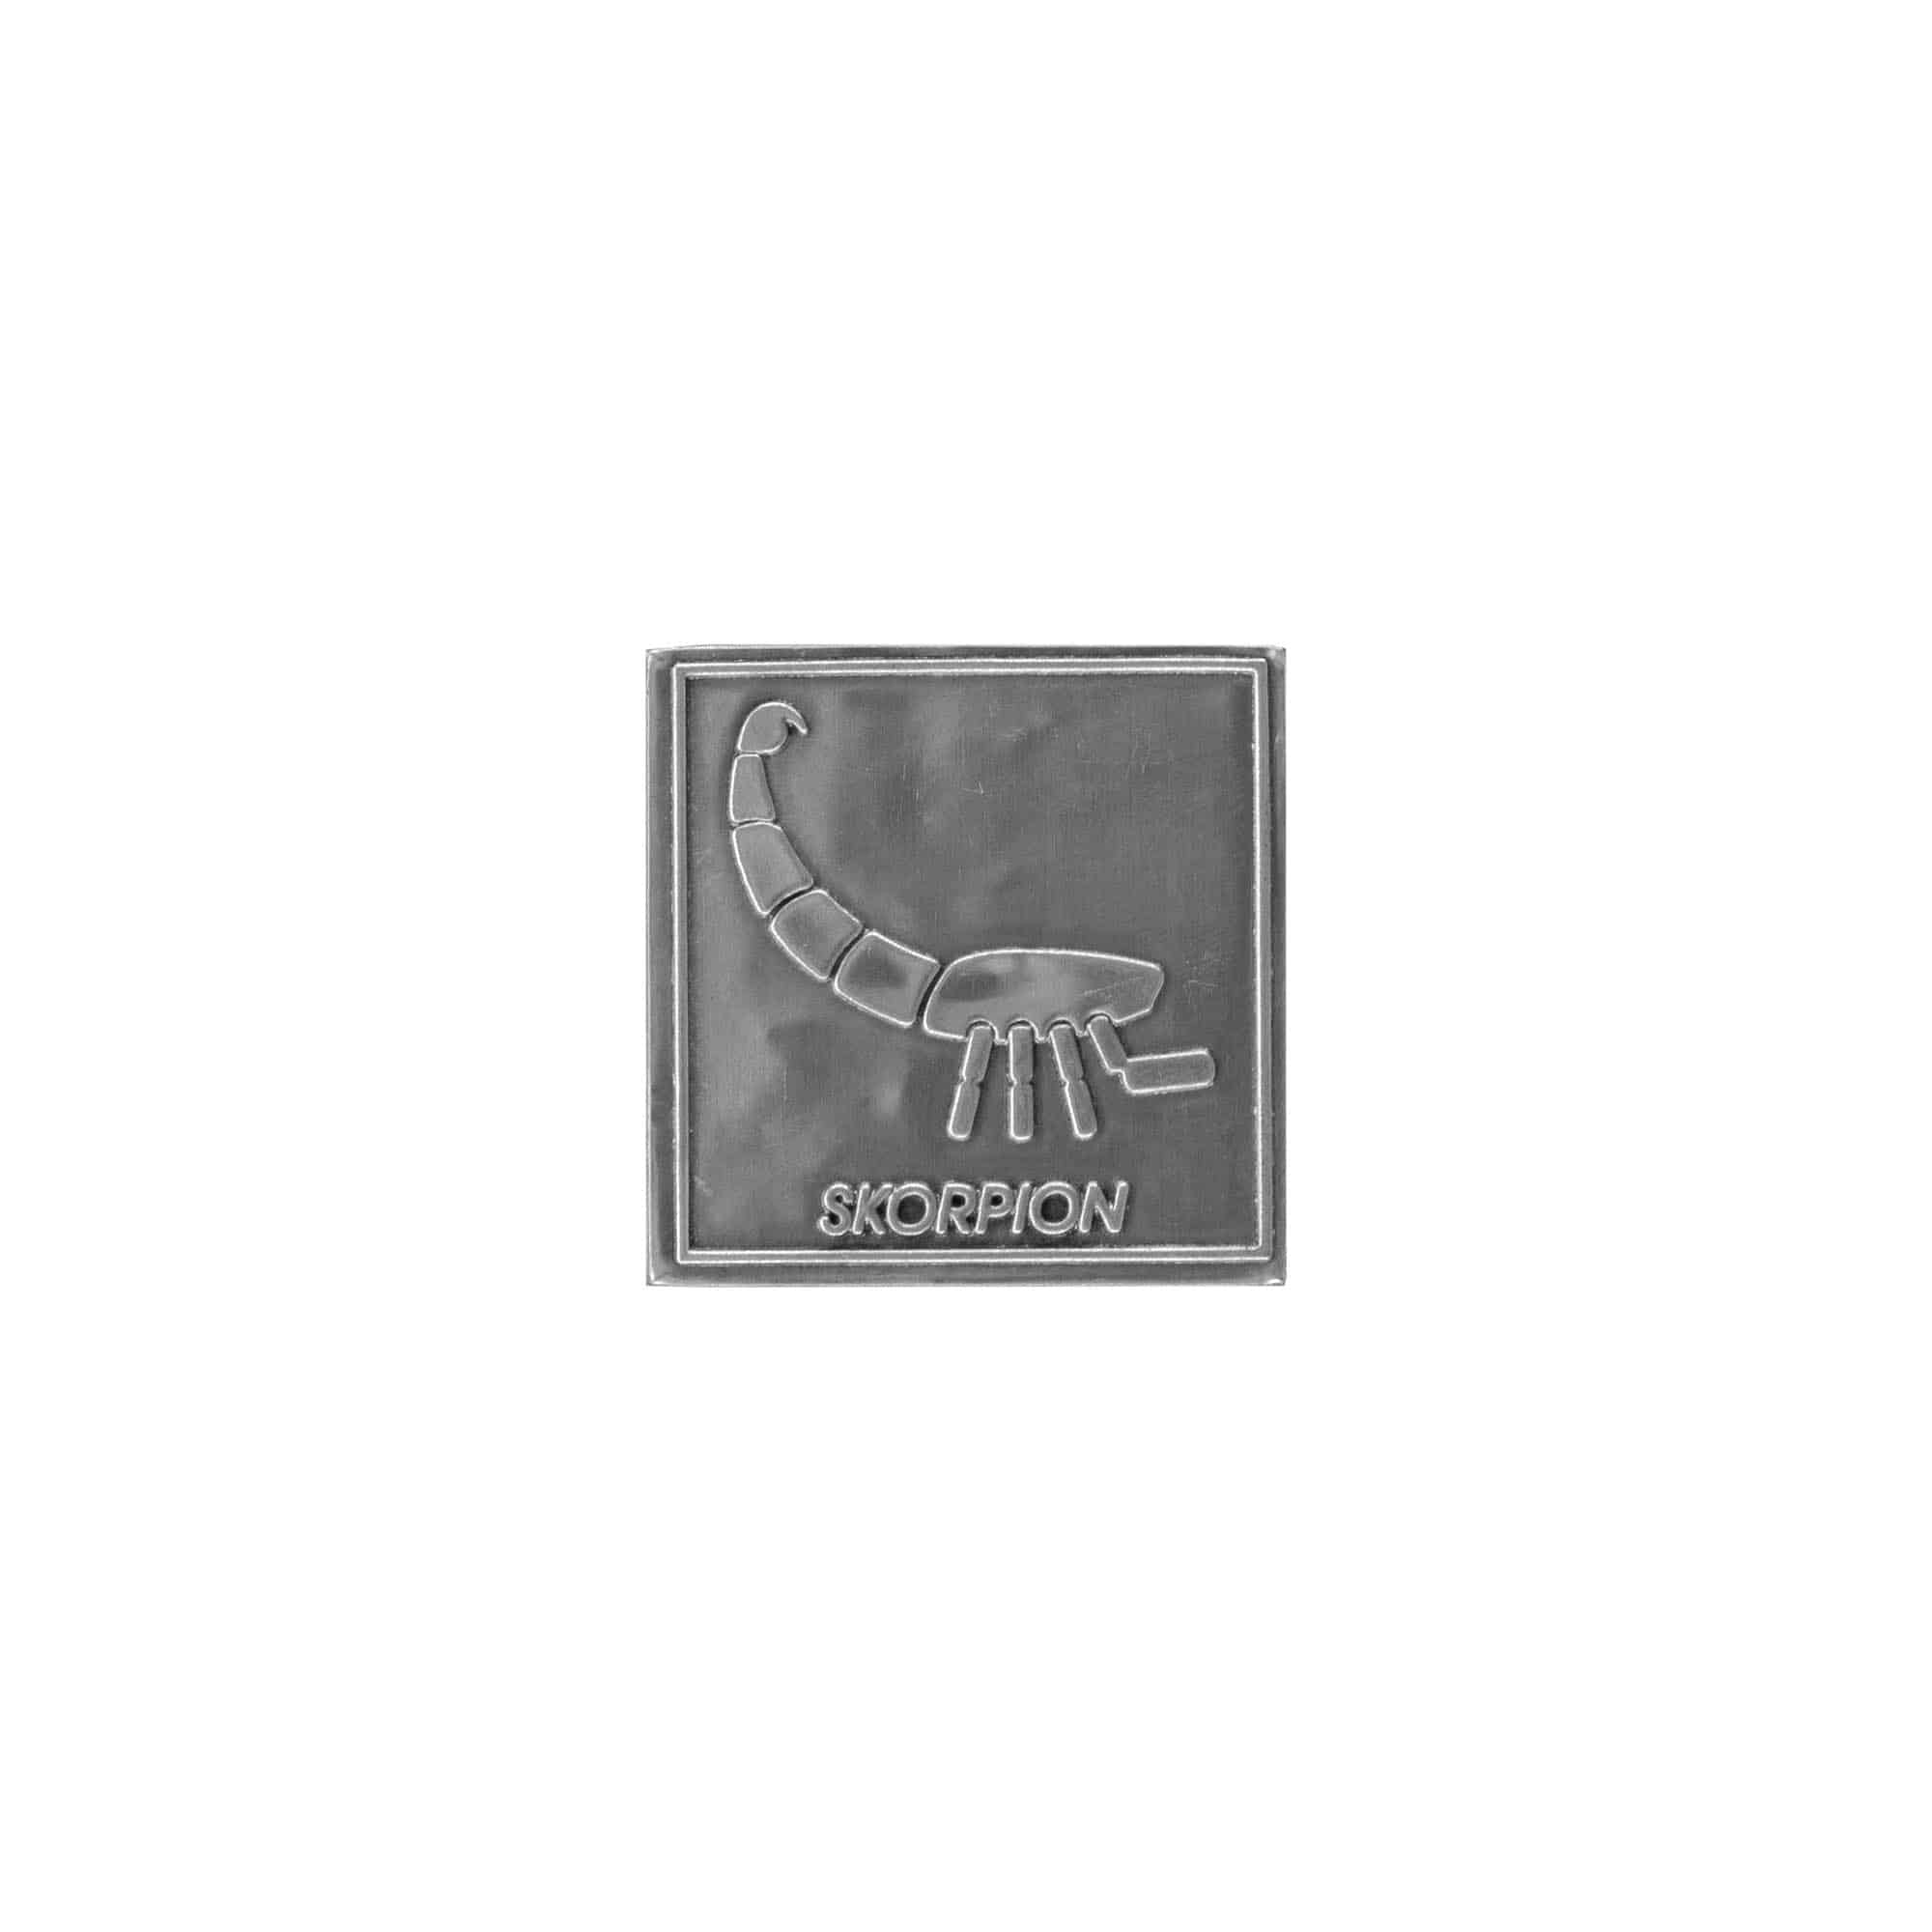 Etykieta cynowa 'Skorpion', kwadratowa, metal, kolor srebrny